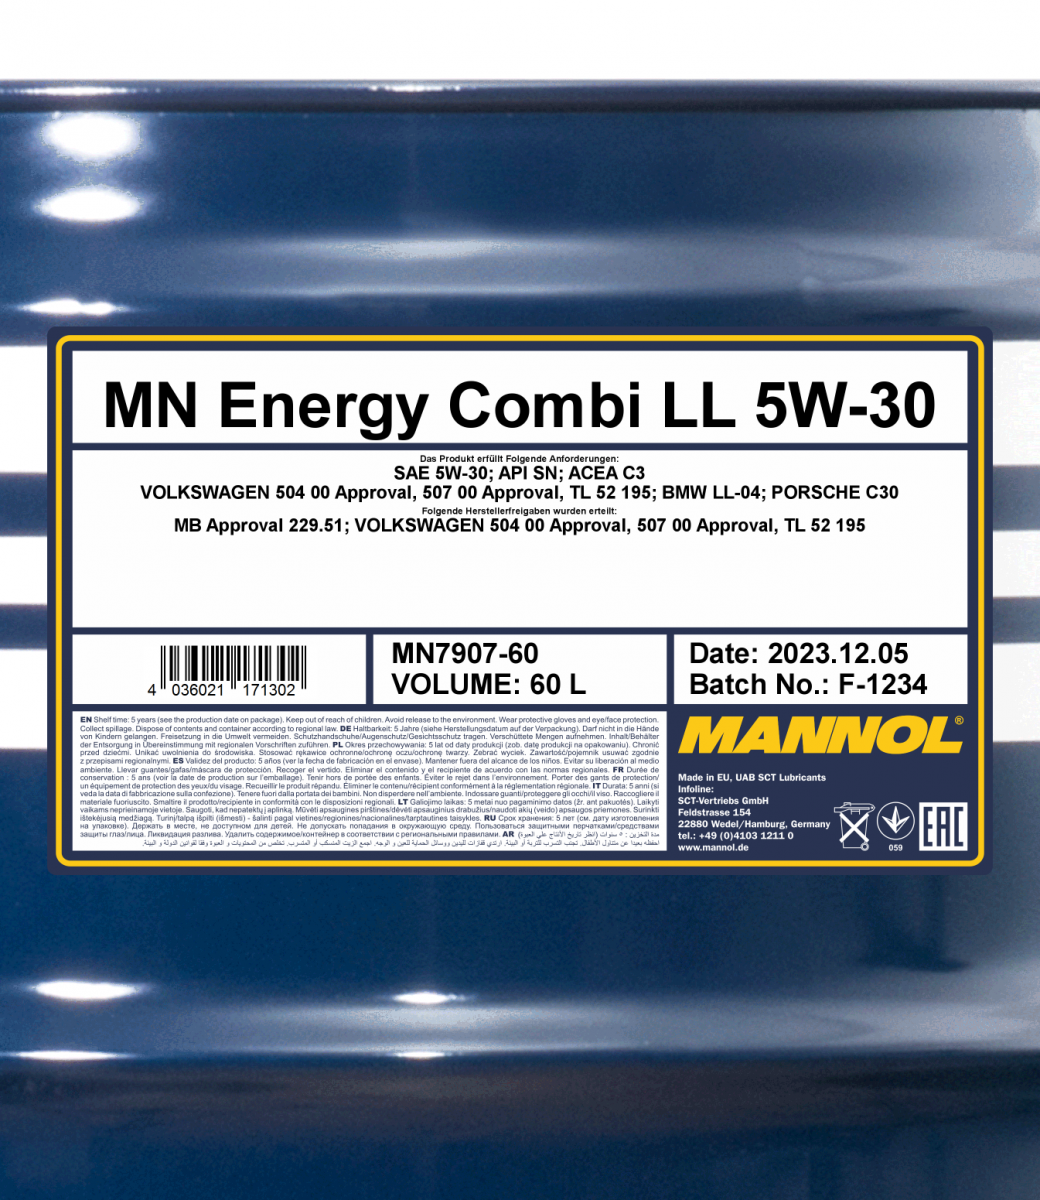 Mannol Energy Combi LL 5W-30 (5 l) Erfahrungen 4.4/5 Sternen